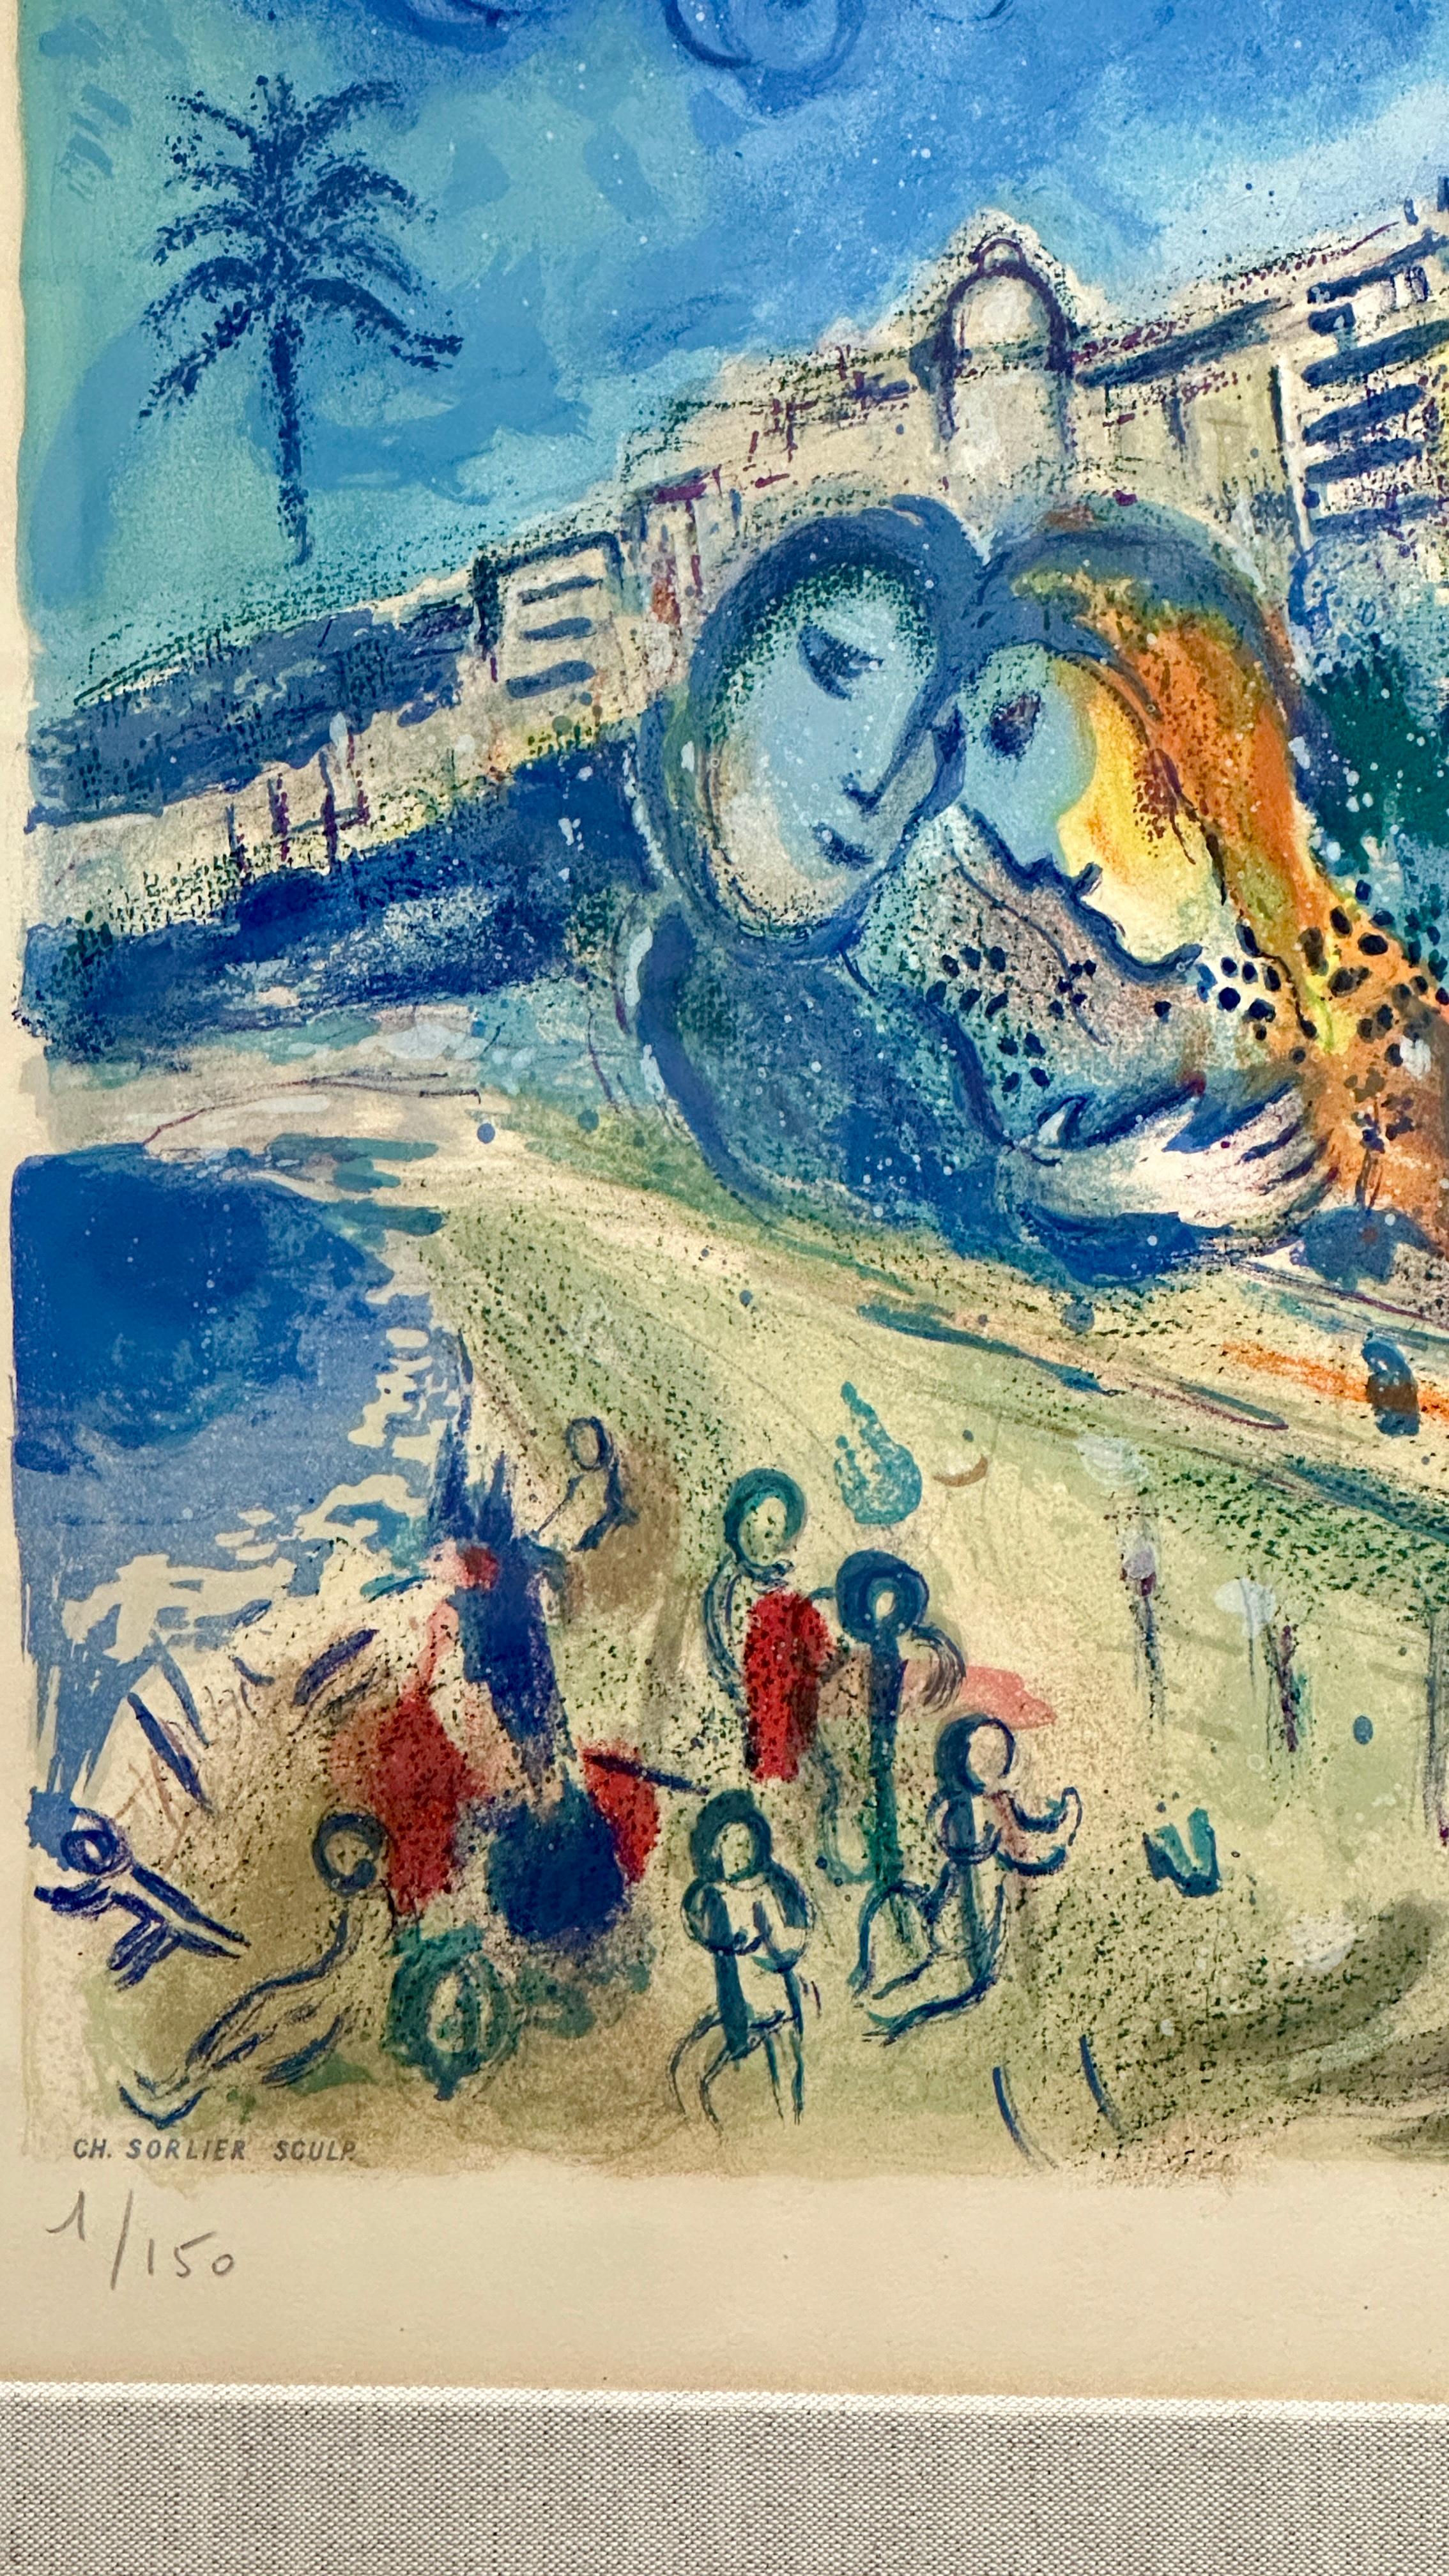 Marc Chagall (1887 - 1985)
